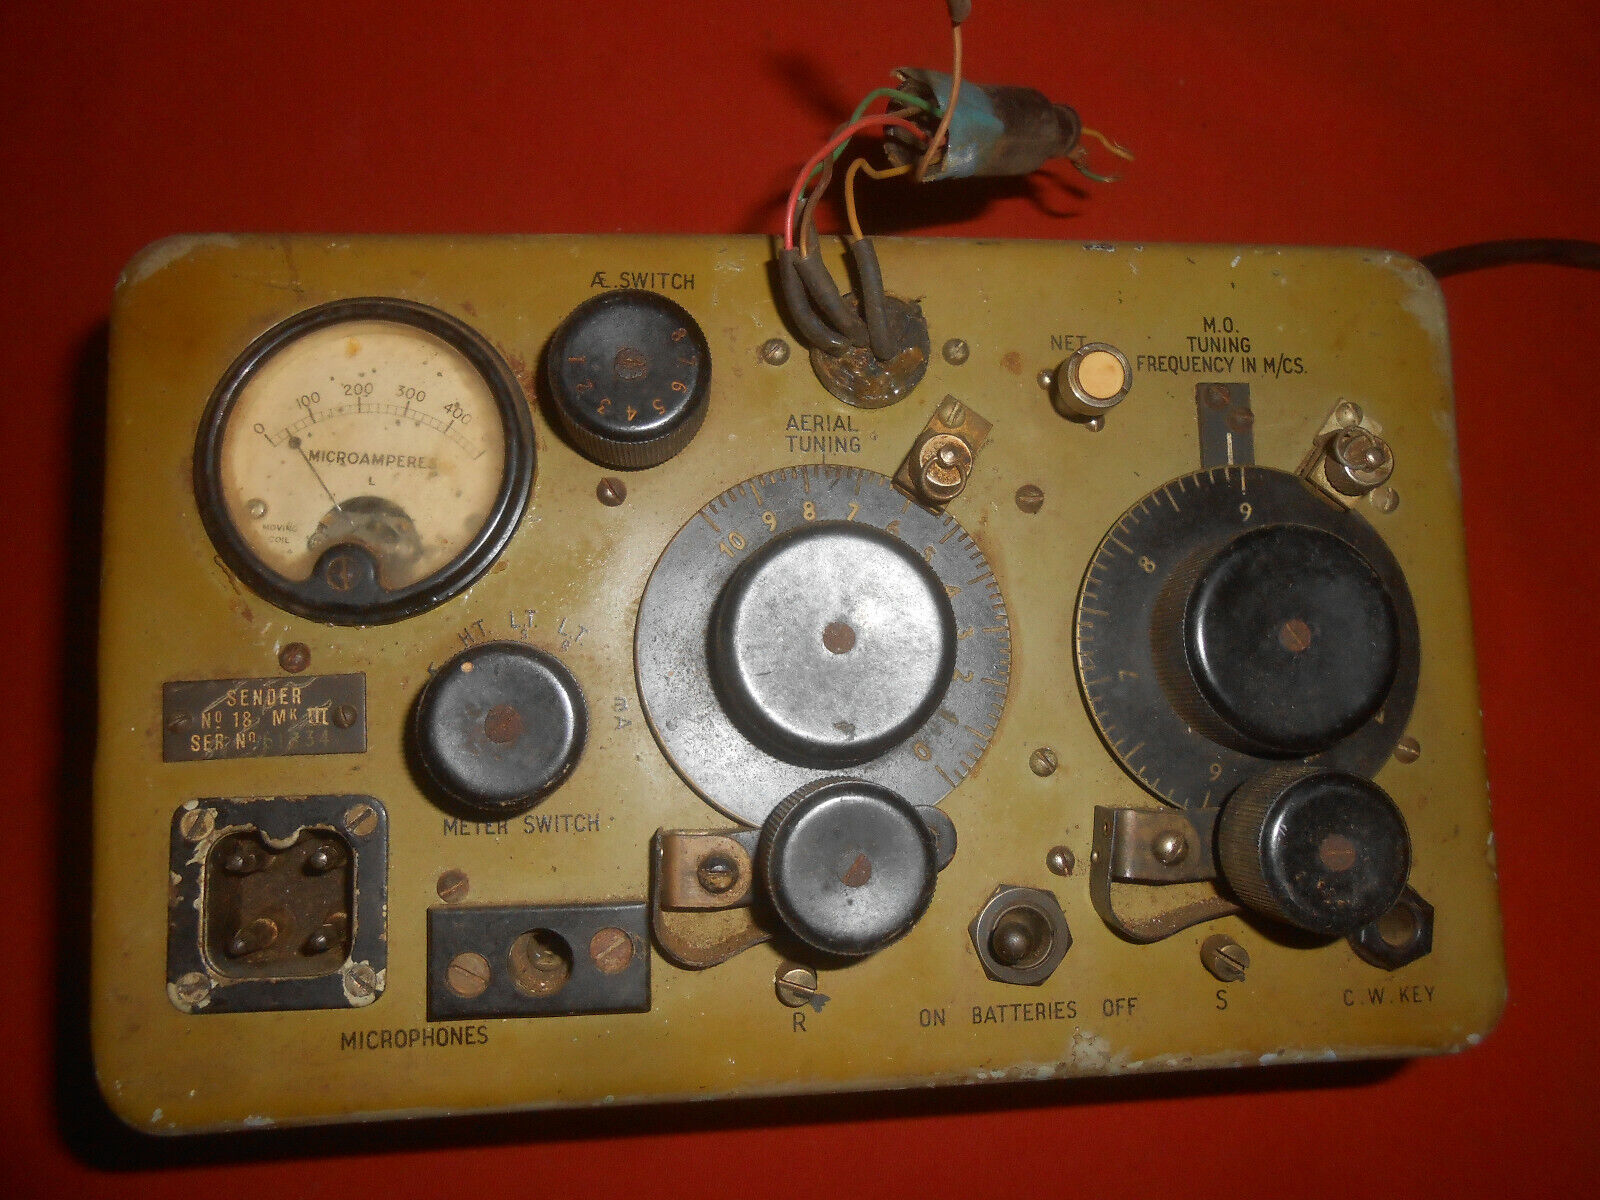 BRITISH ARMY :WW2 radio - wireless set WS 18 transmitter radio spares or repairs